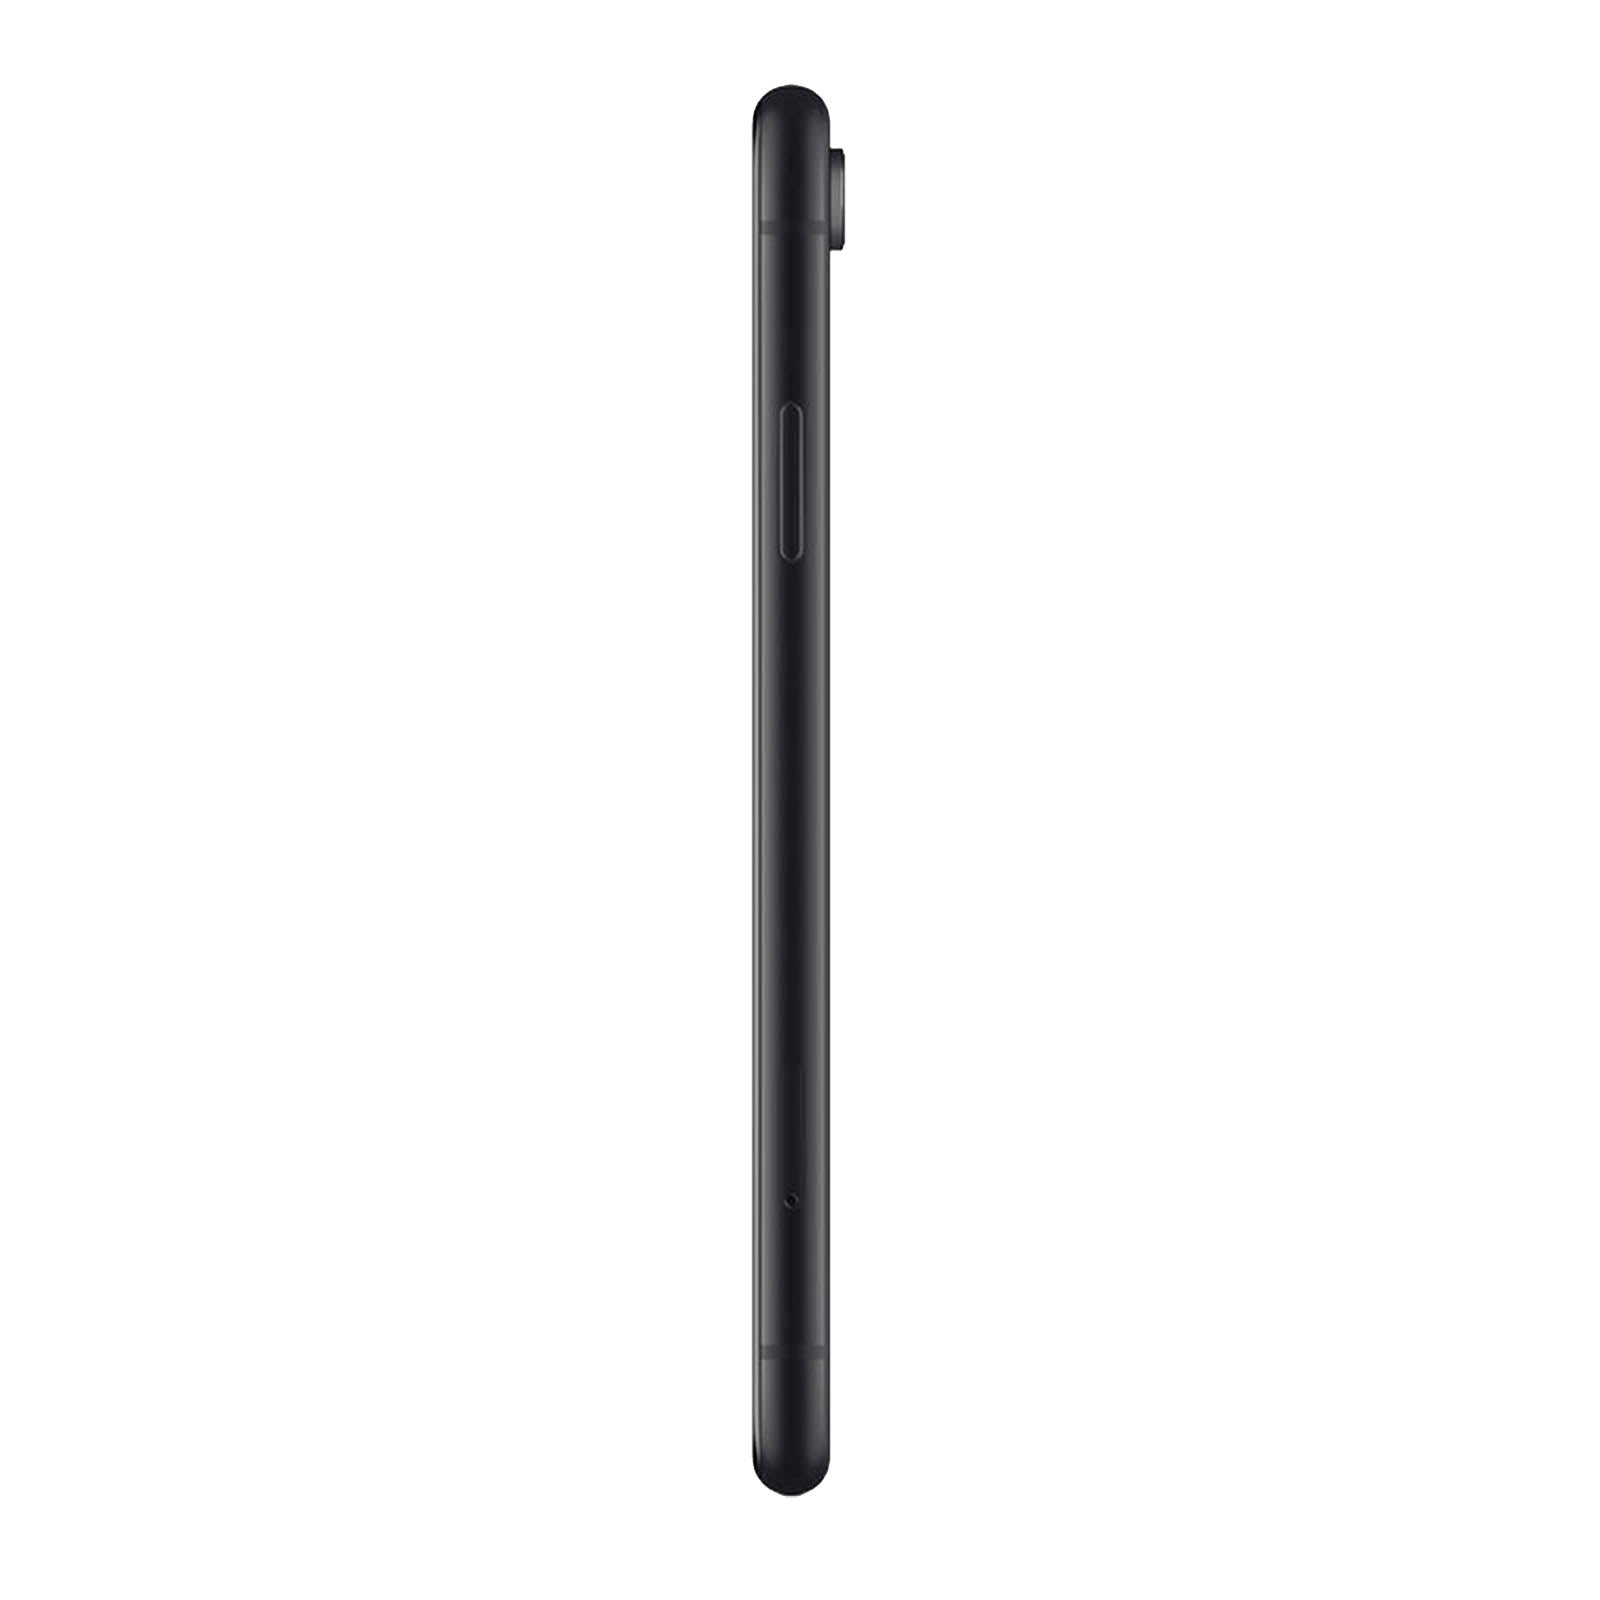 Apple iPhone XR 128GB Black Very Good - T-Mobile